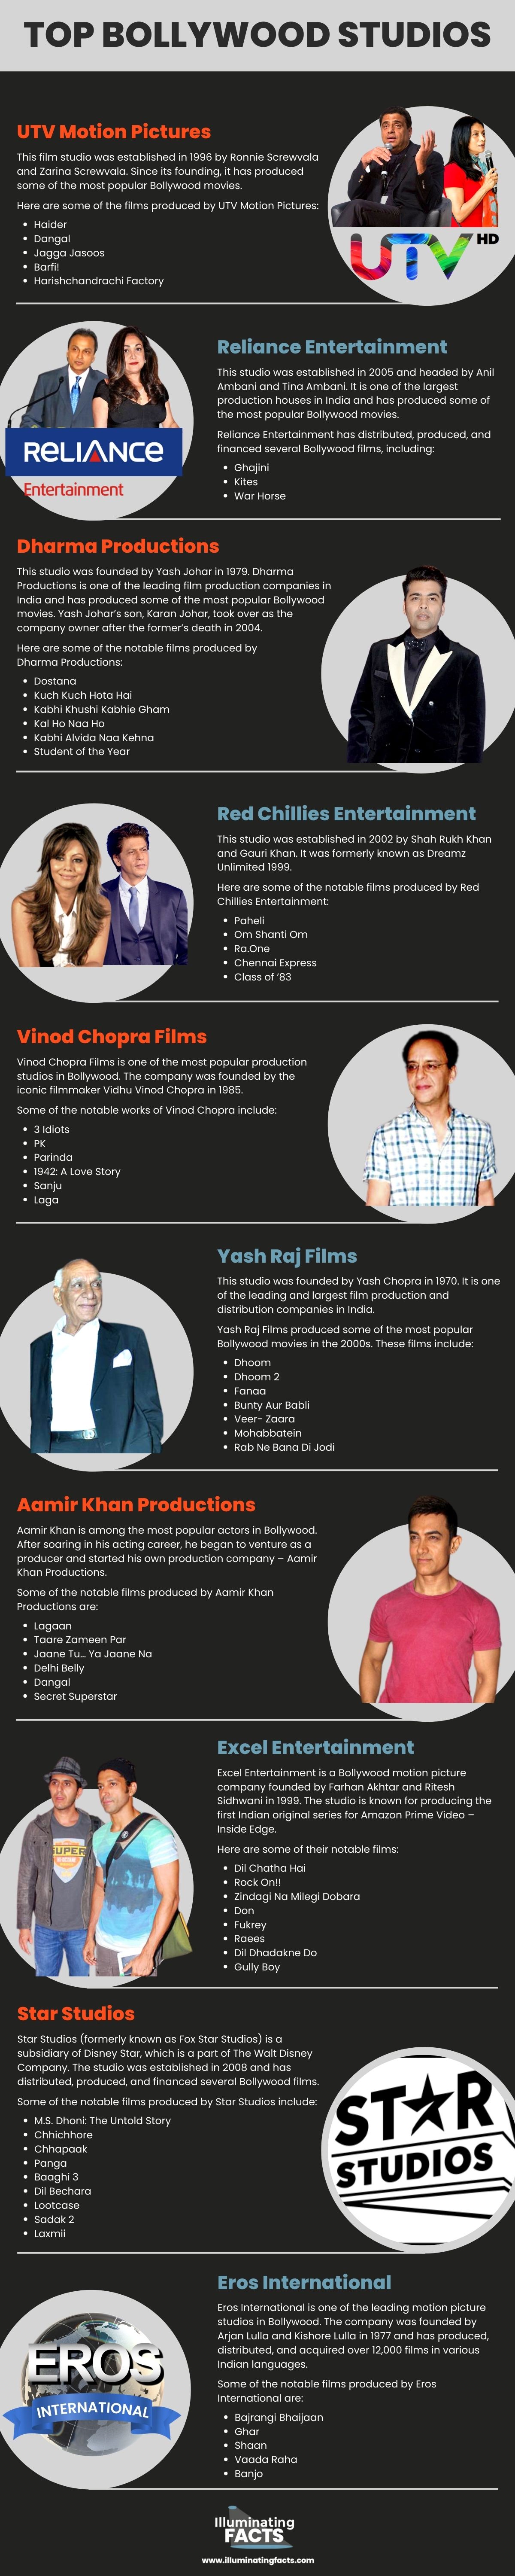 Top Bollywood Studios